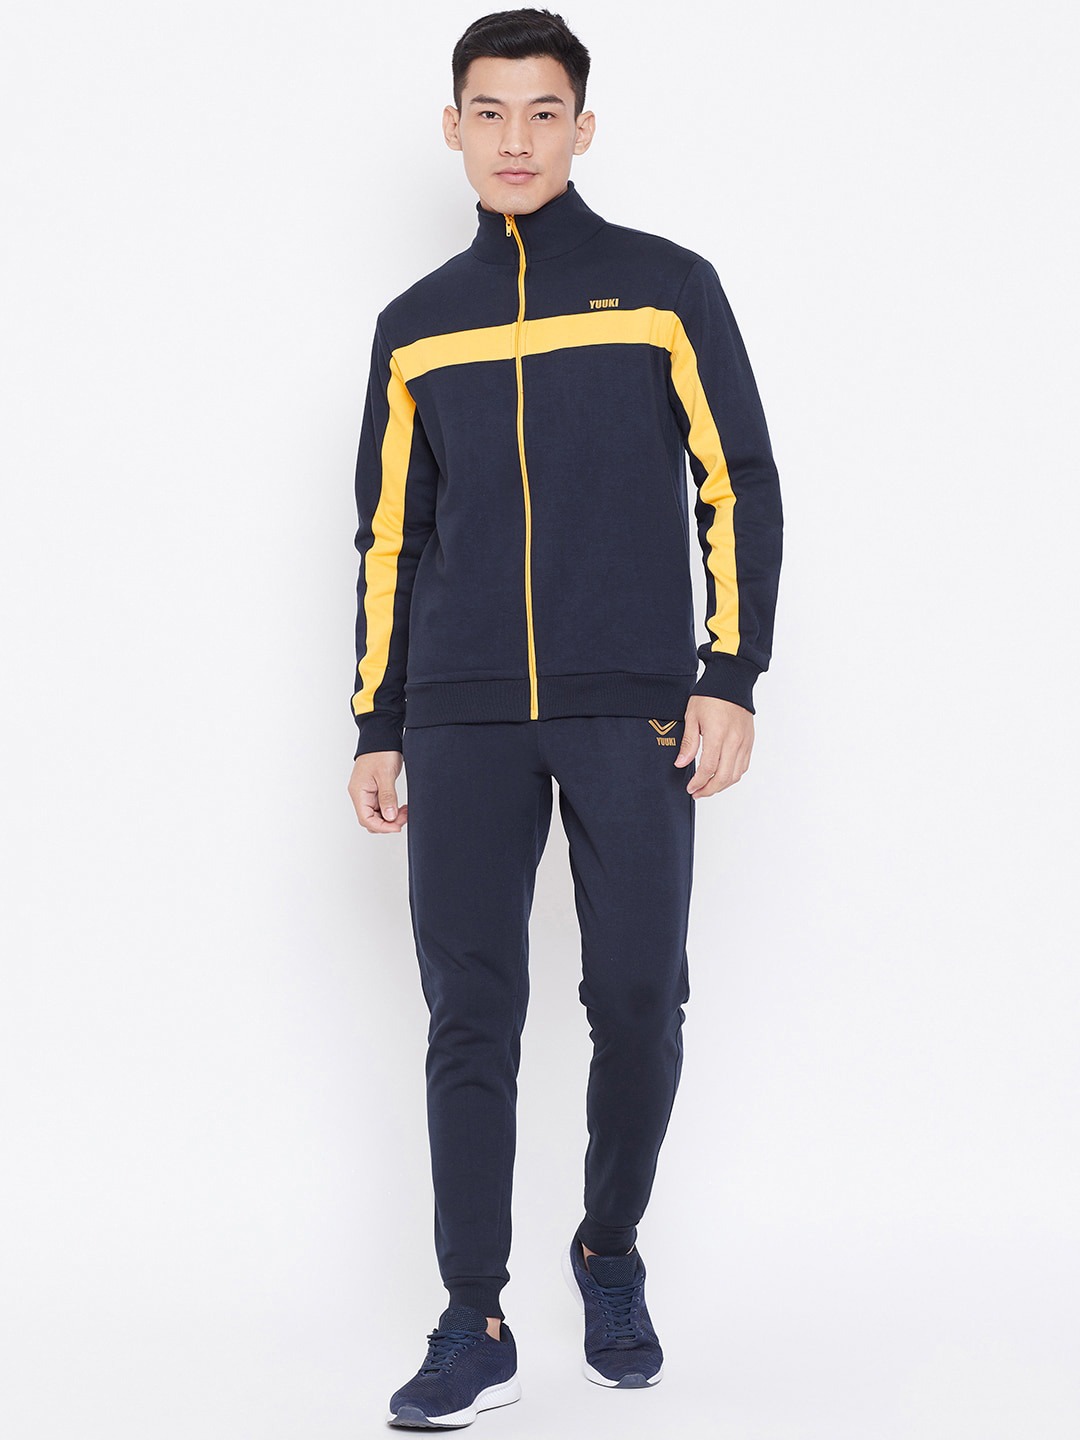 Clothing Tracksuits | Yuuki Men Navy Blue & Yellow Colourblocked Tracksuit - EY61255